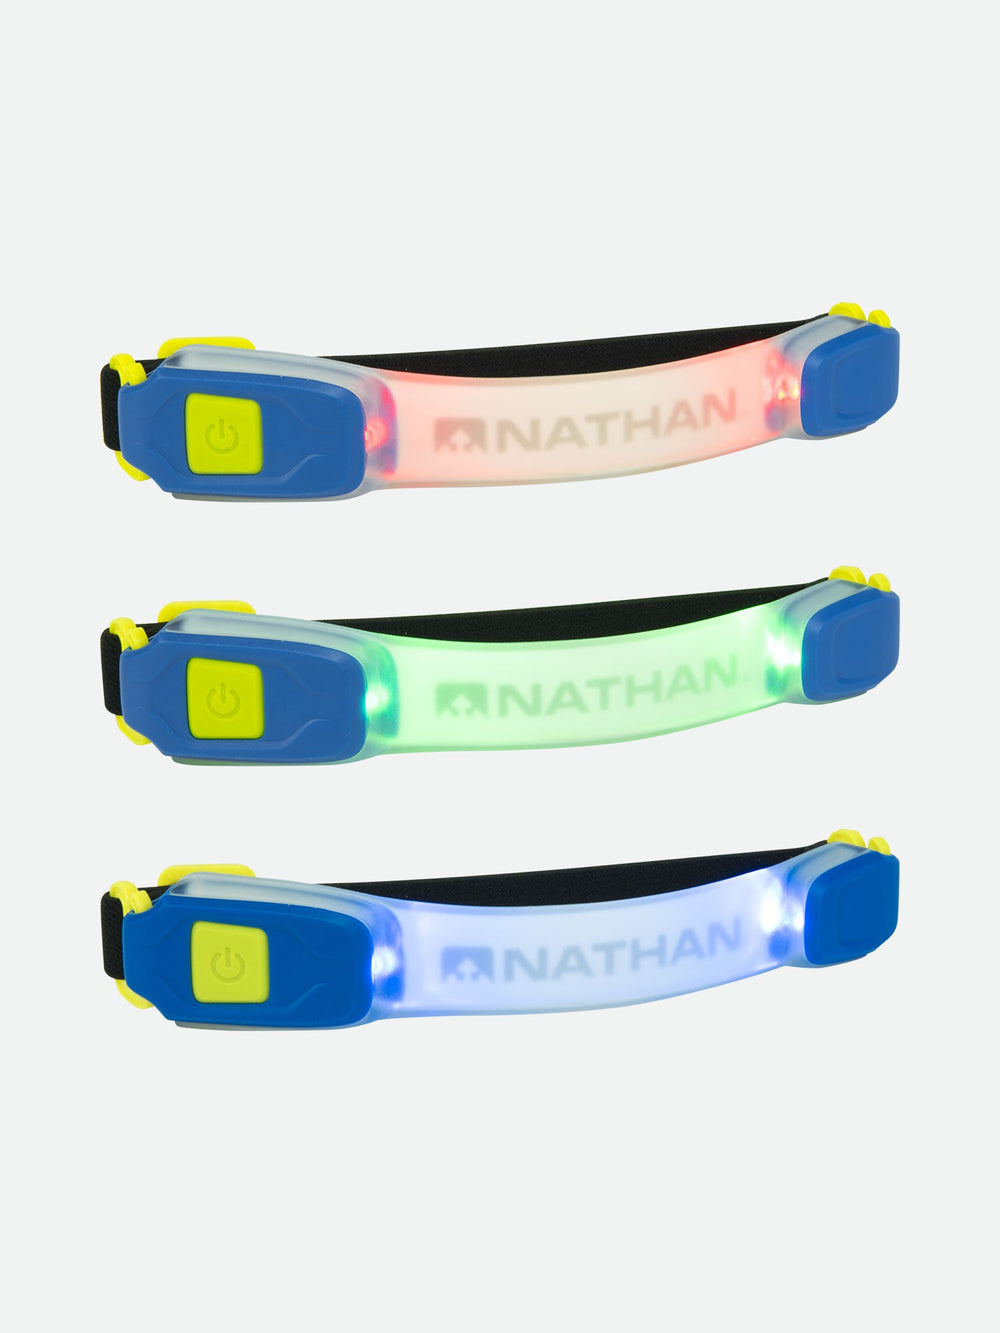 Nathan Lightbender RX Armband Light